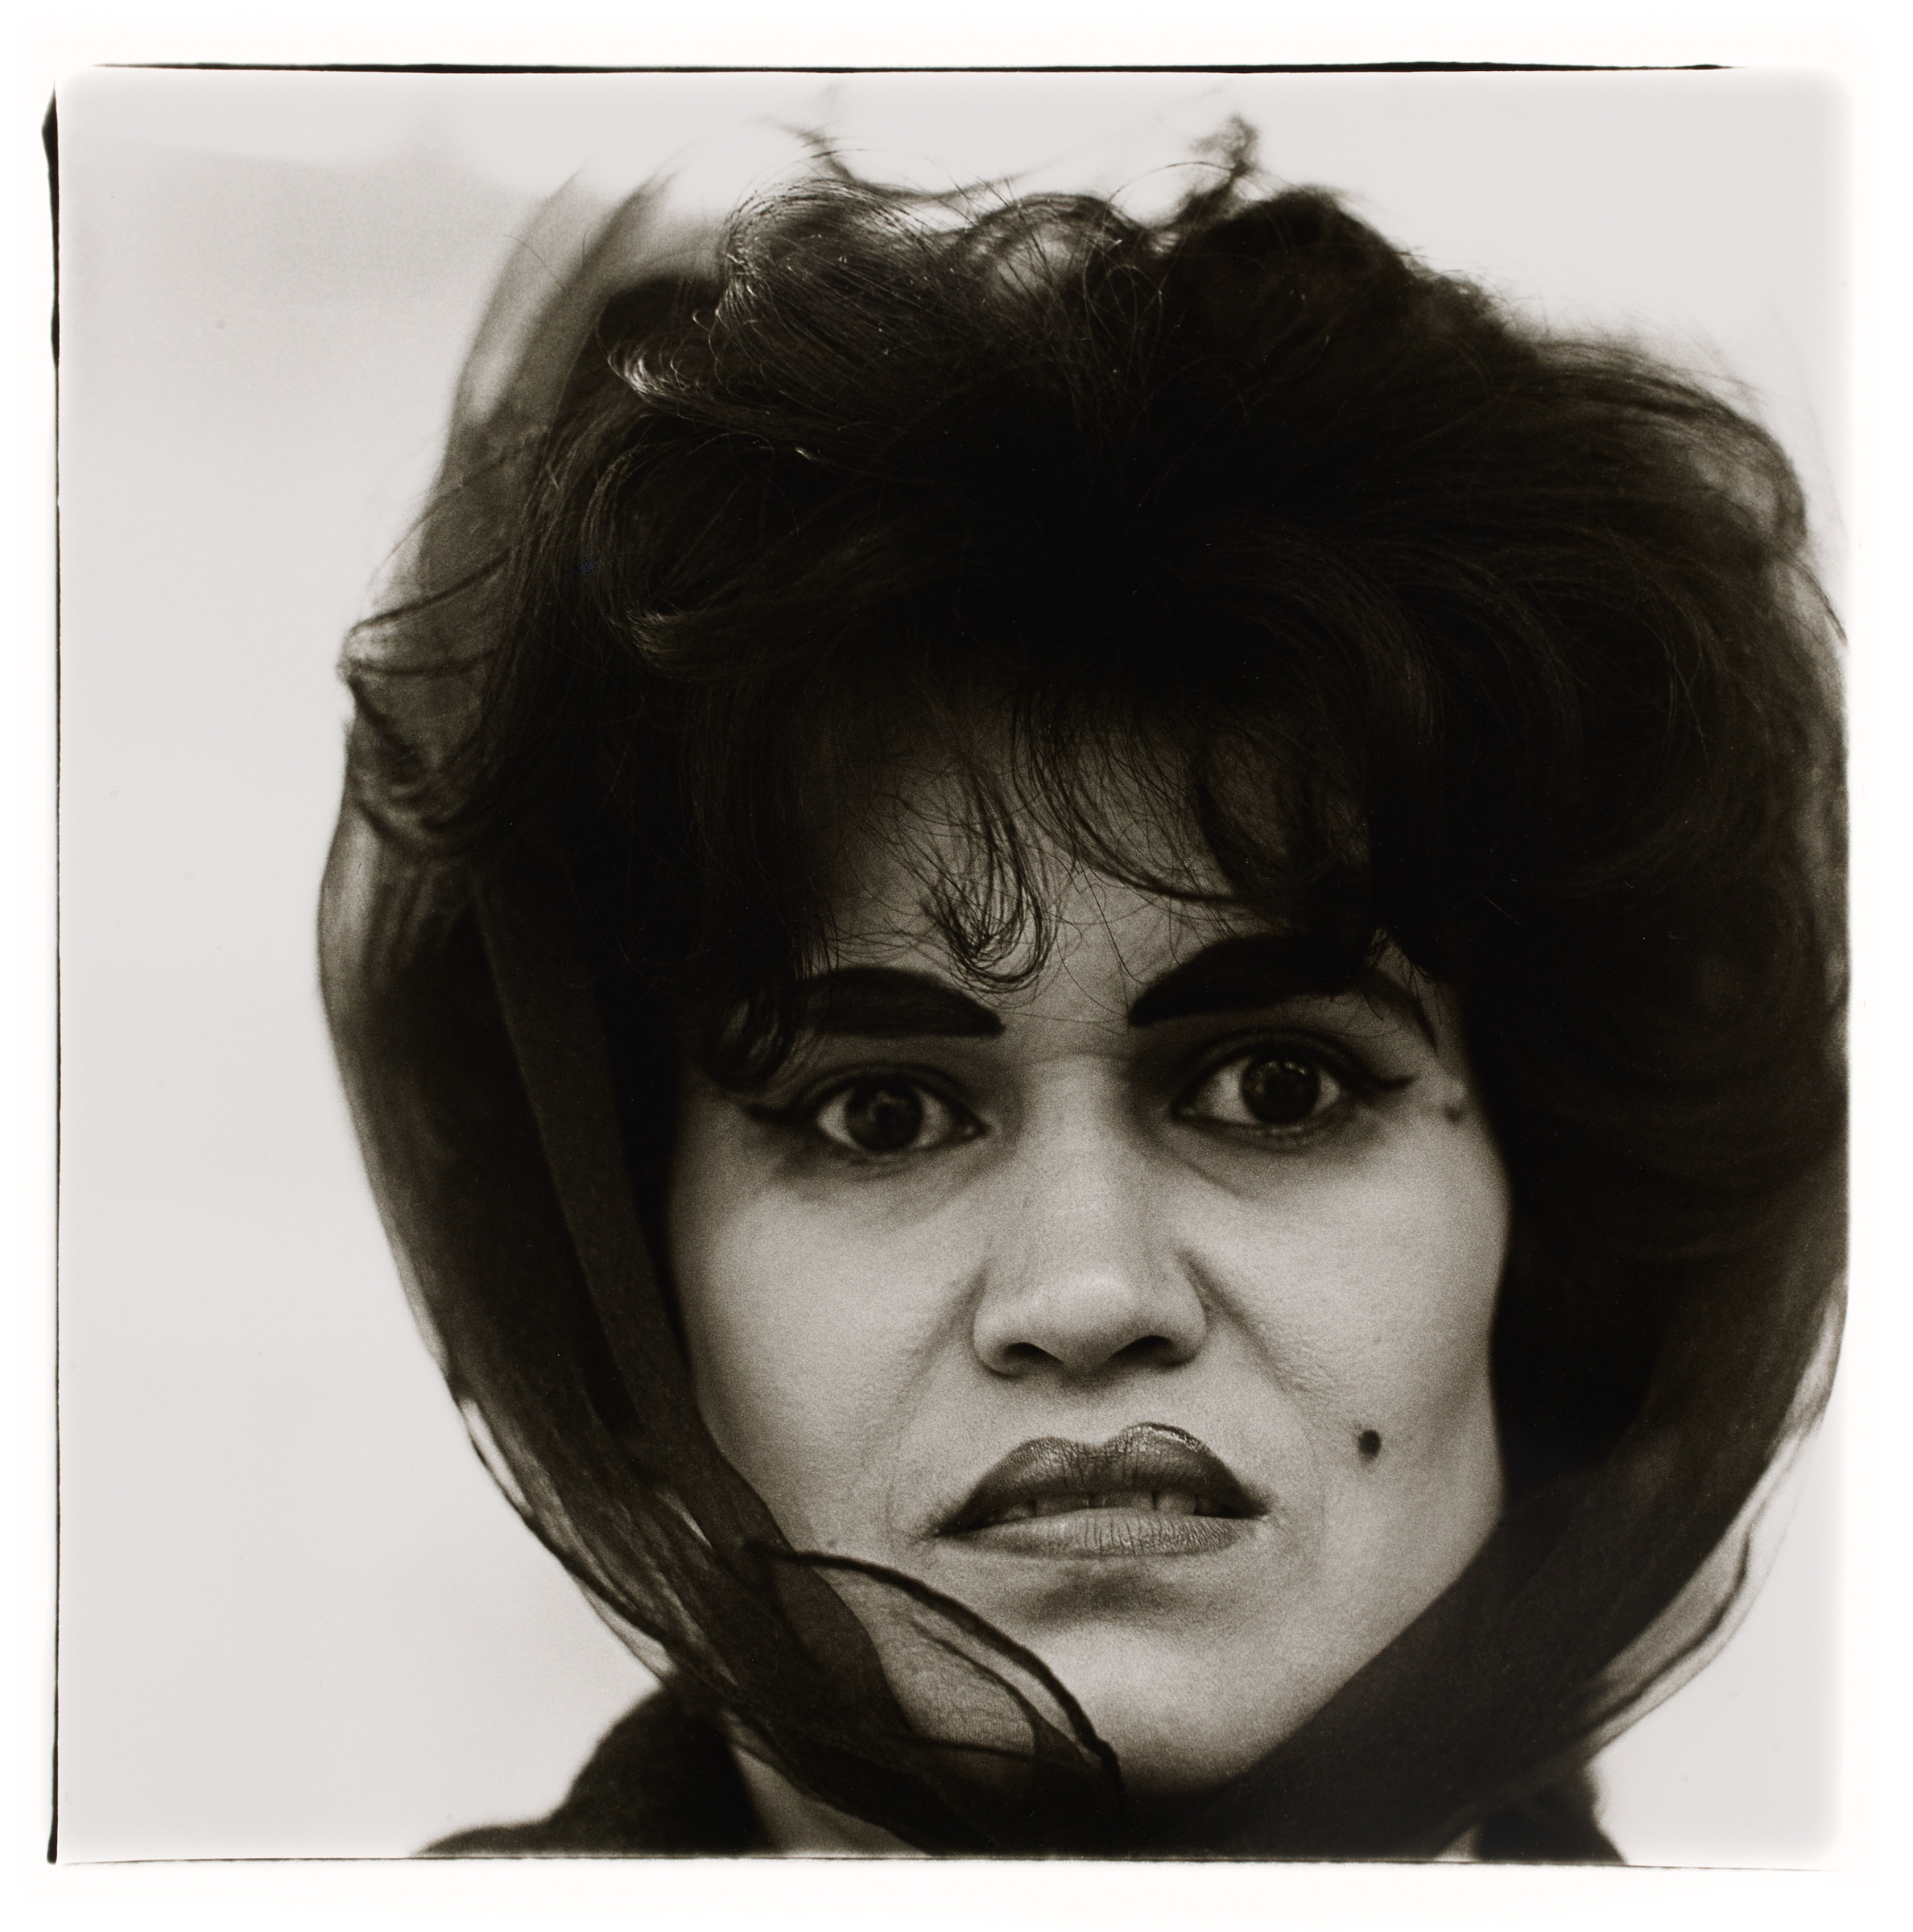     Diane Arbus, Puerto Rican woman with a beauty mark, N.Y.C., 1965. Gelatin silver print, sheet: 50.8 x 40.6 cm. Art Gallery of Ontario. Gift of Phil Lind, 2016. Copyright © Estate of Diane Arbus.

